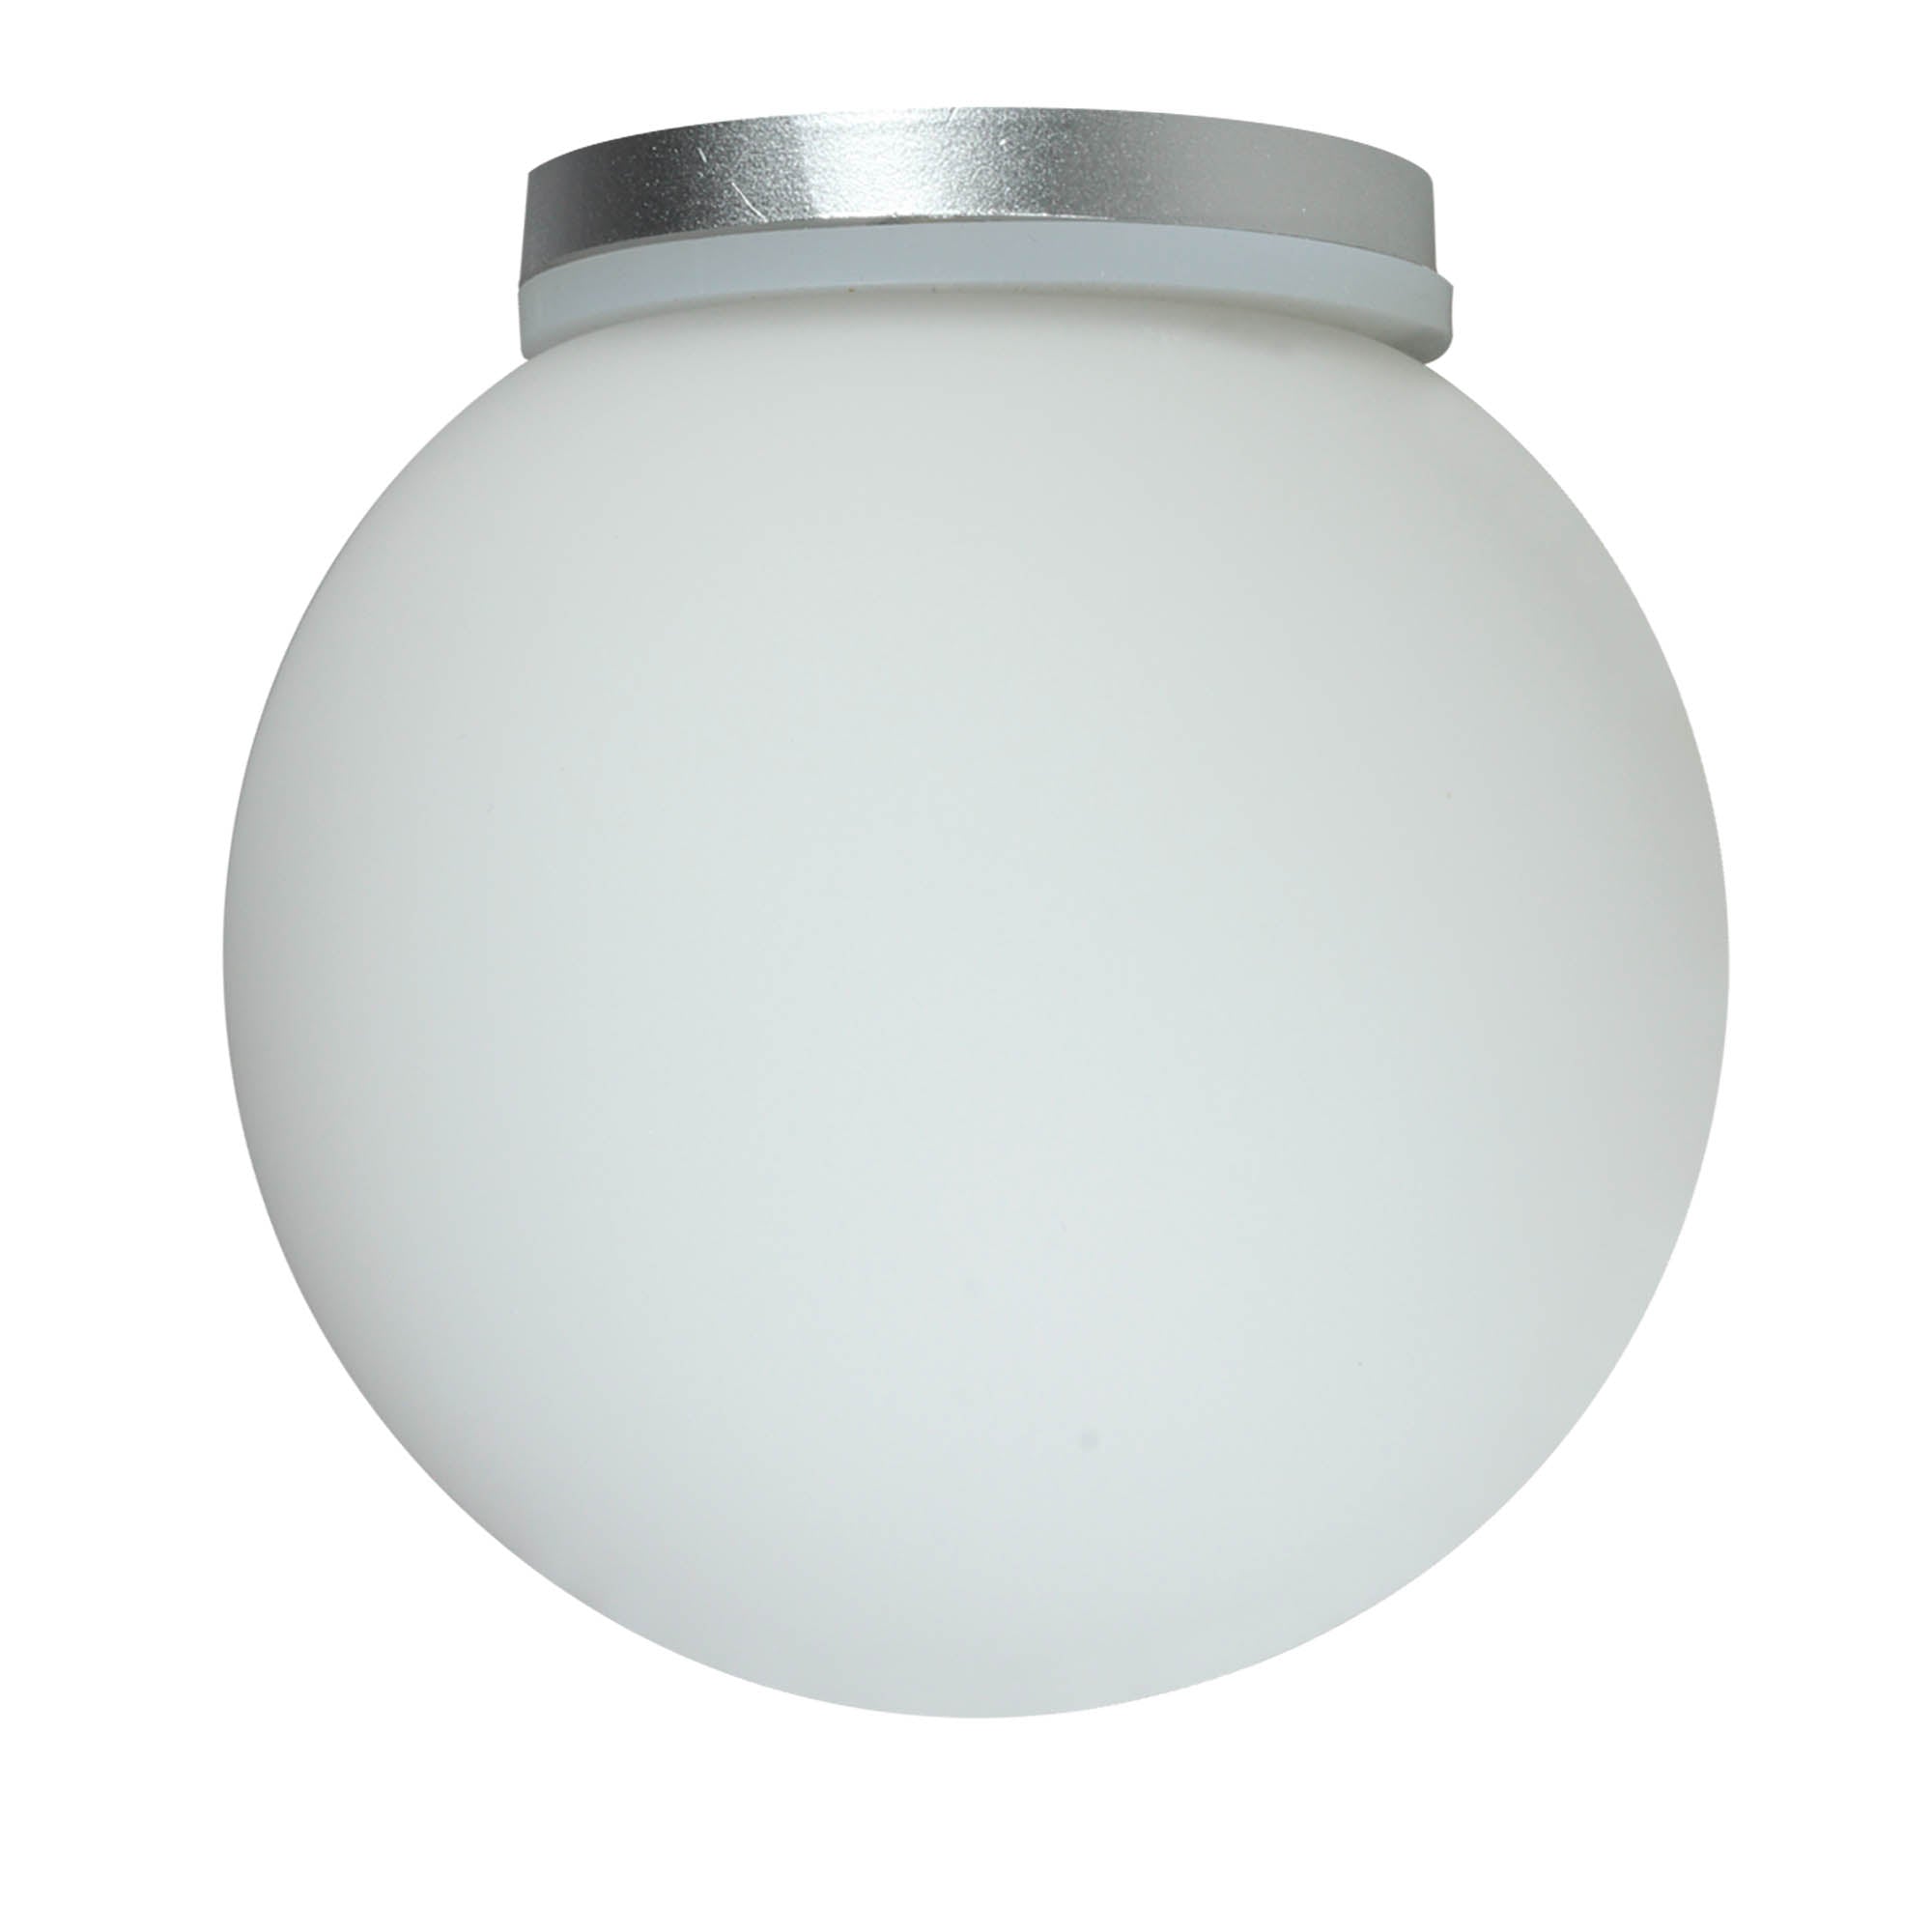 Luminaria LED Decorativa Esférica para Muro o Techo, Modelo DL-5903.B30 Illux